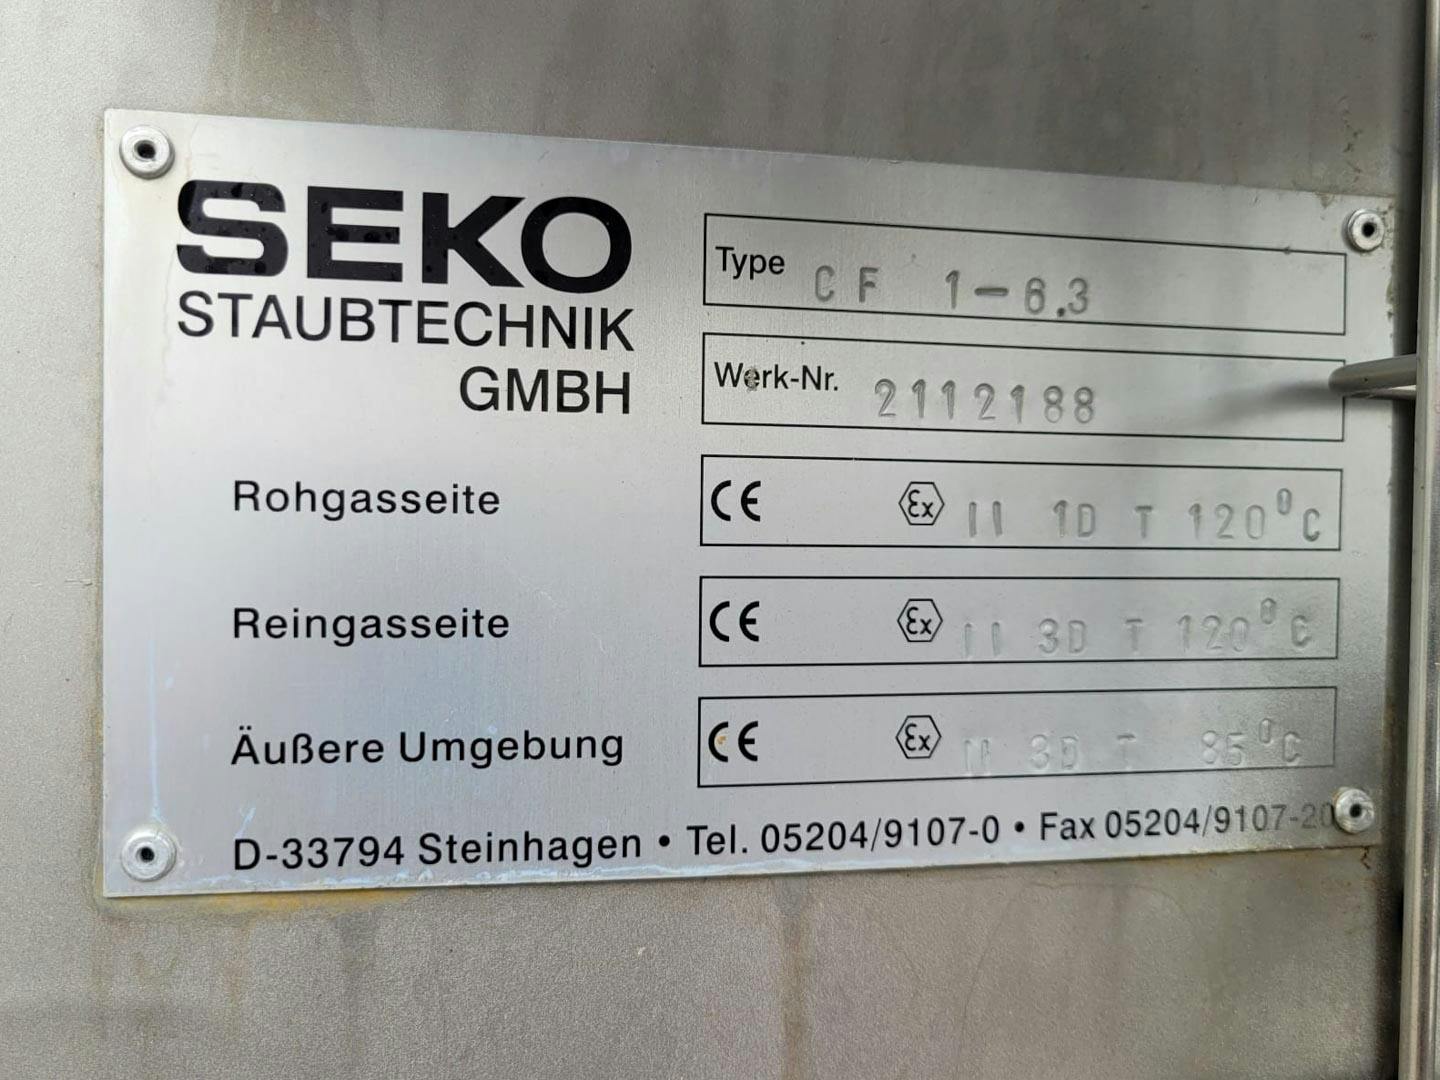 Seko Staubtechnik - Enveloppenfilter - image 16